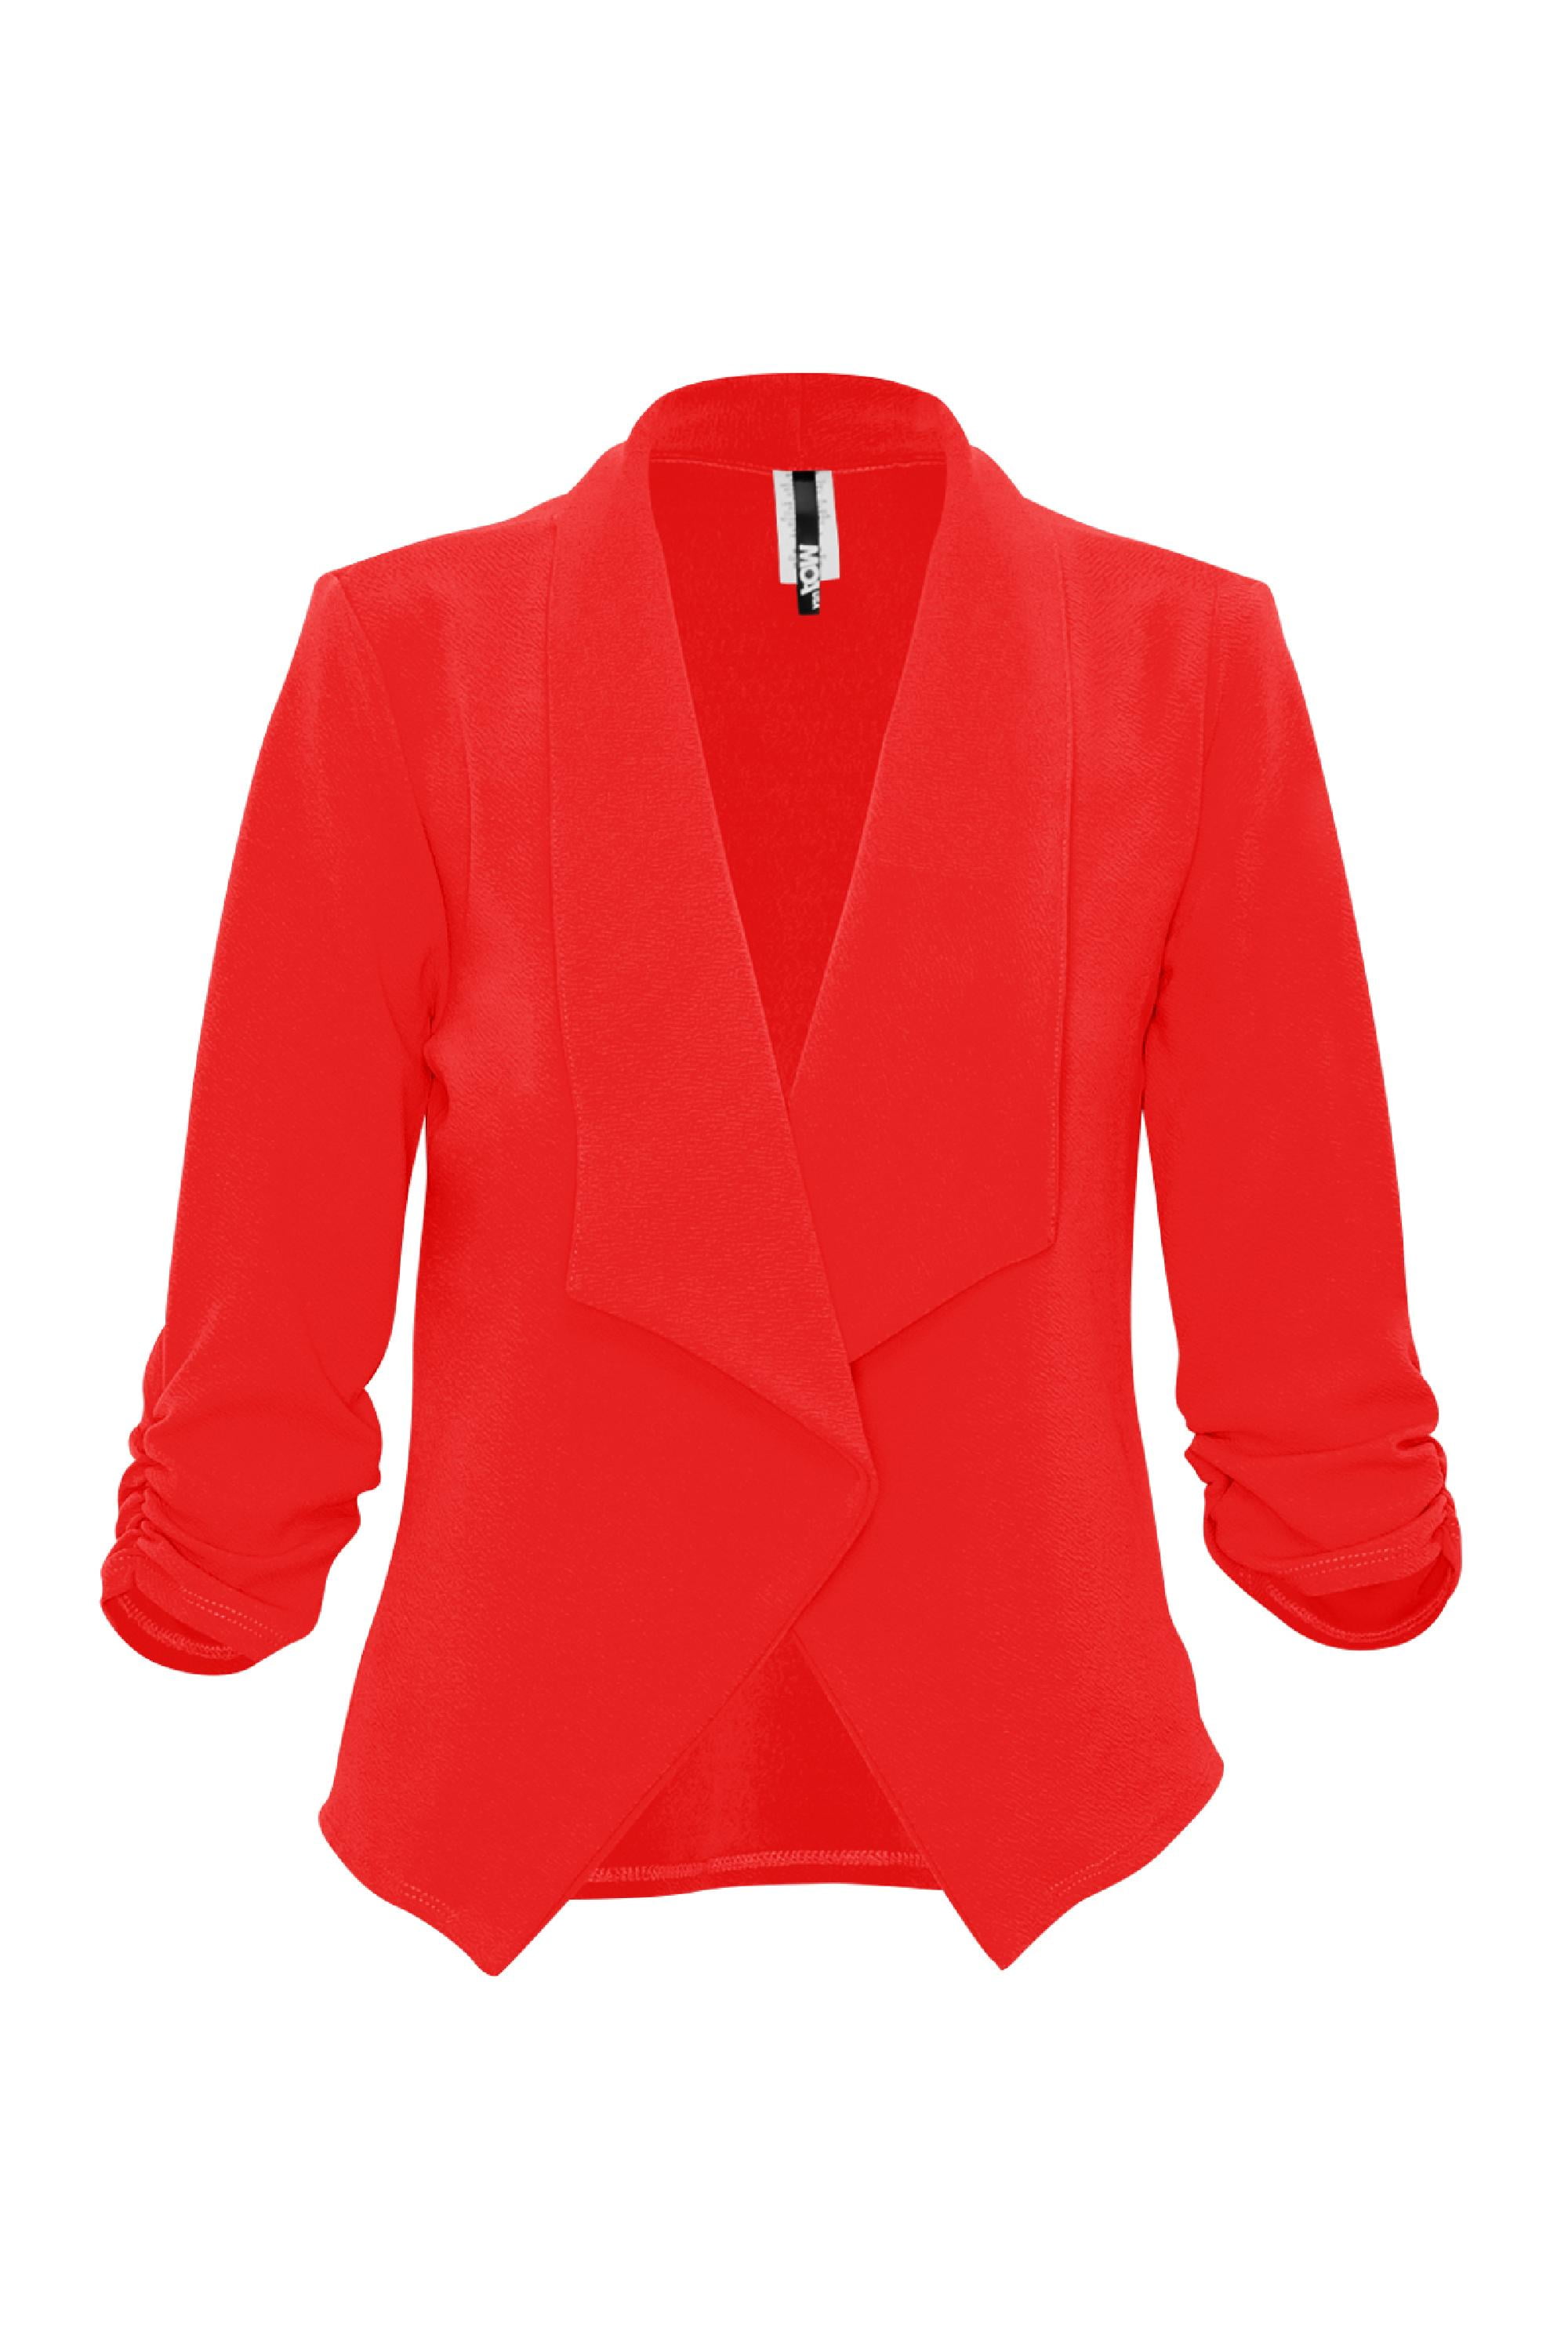 Women's Casual 3/4 Sleeve Solid Open Blazer Jacket - Walmart.com